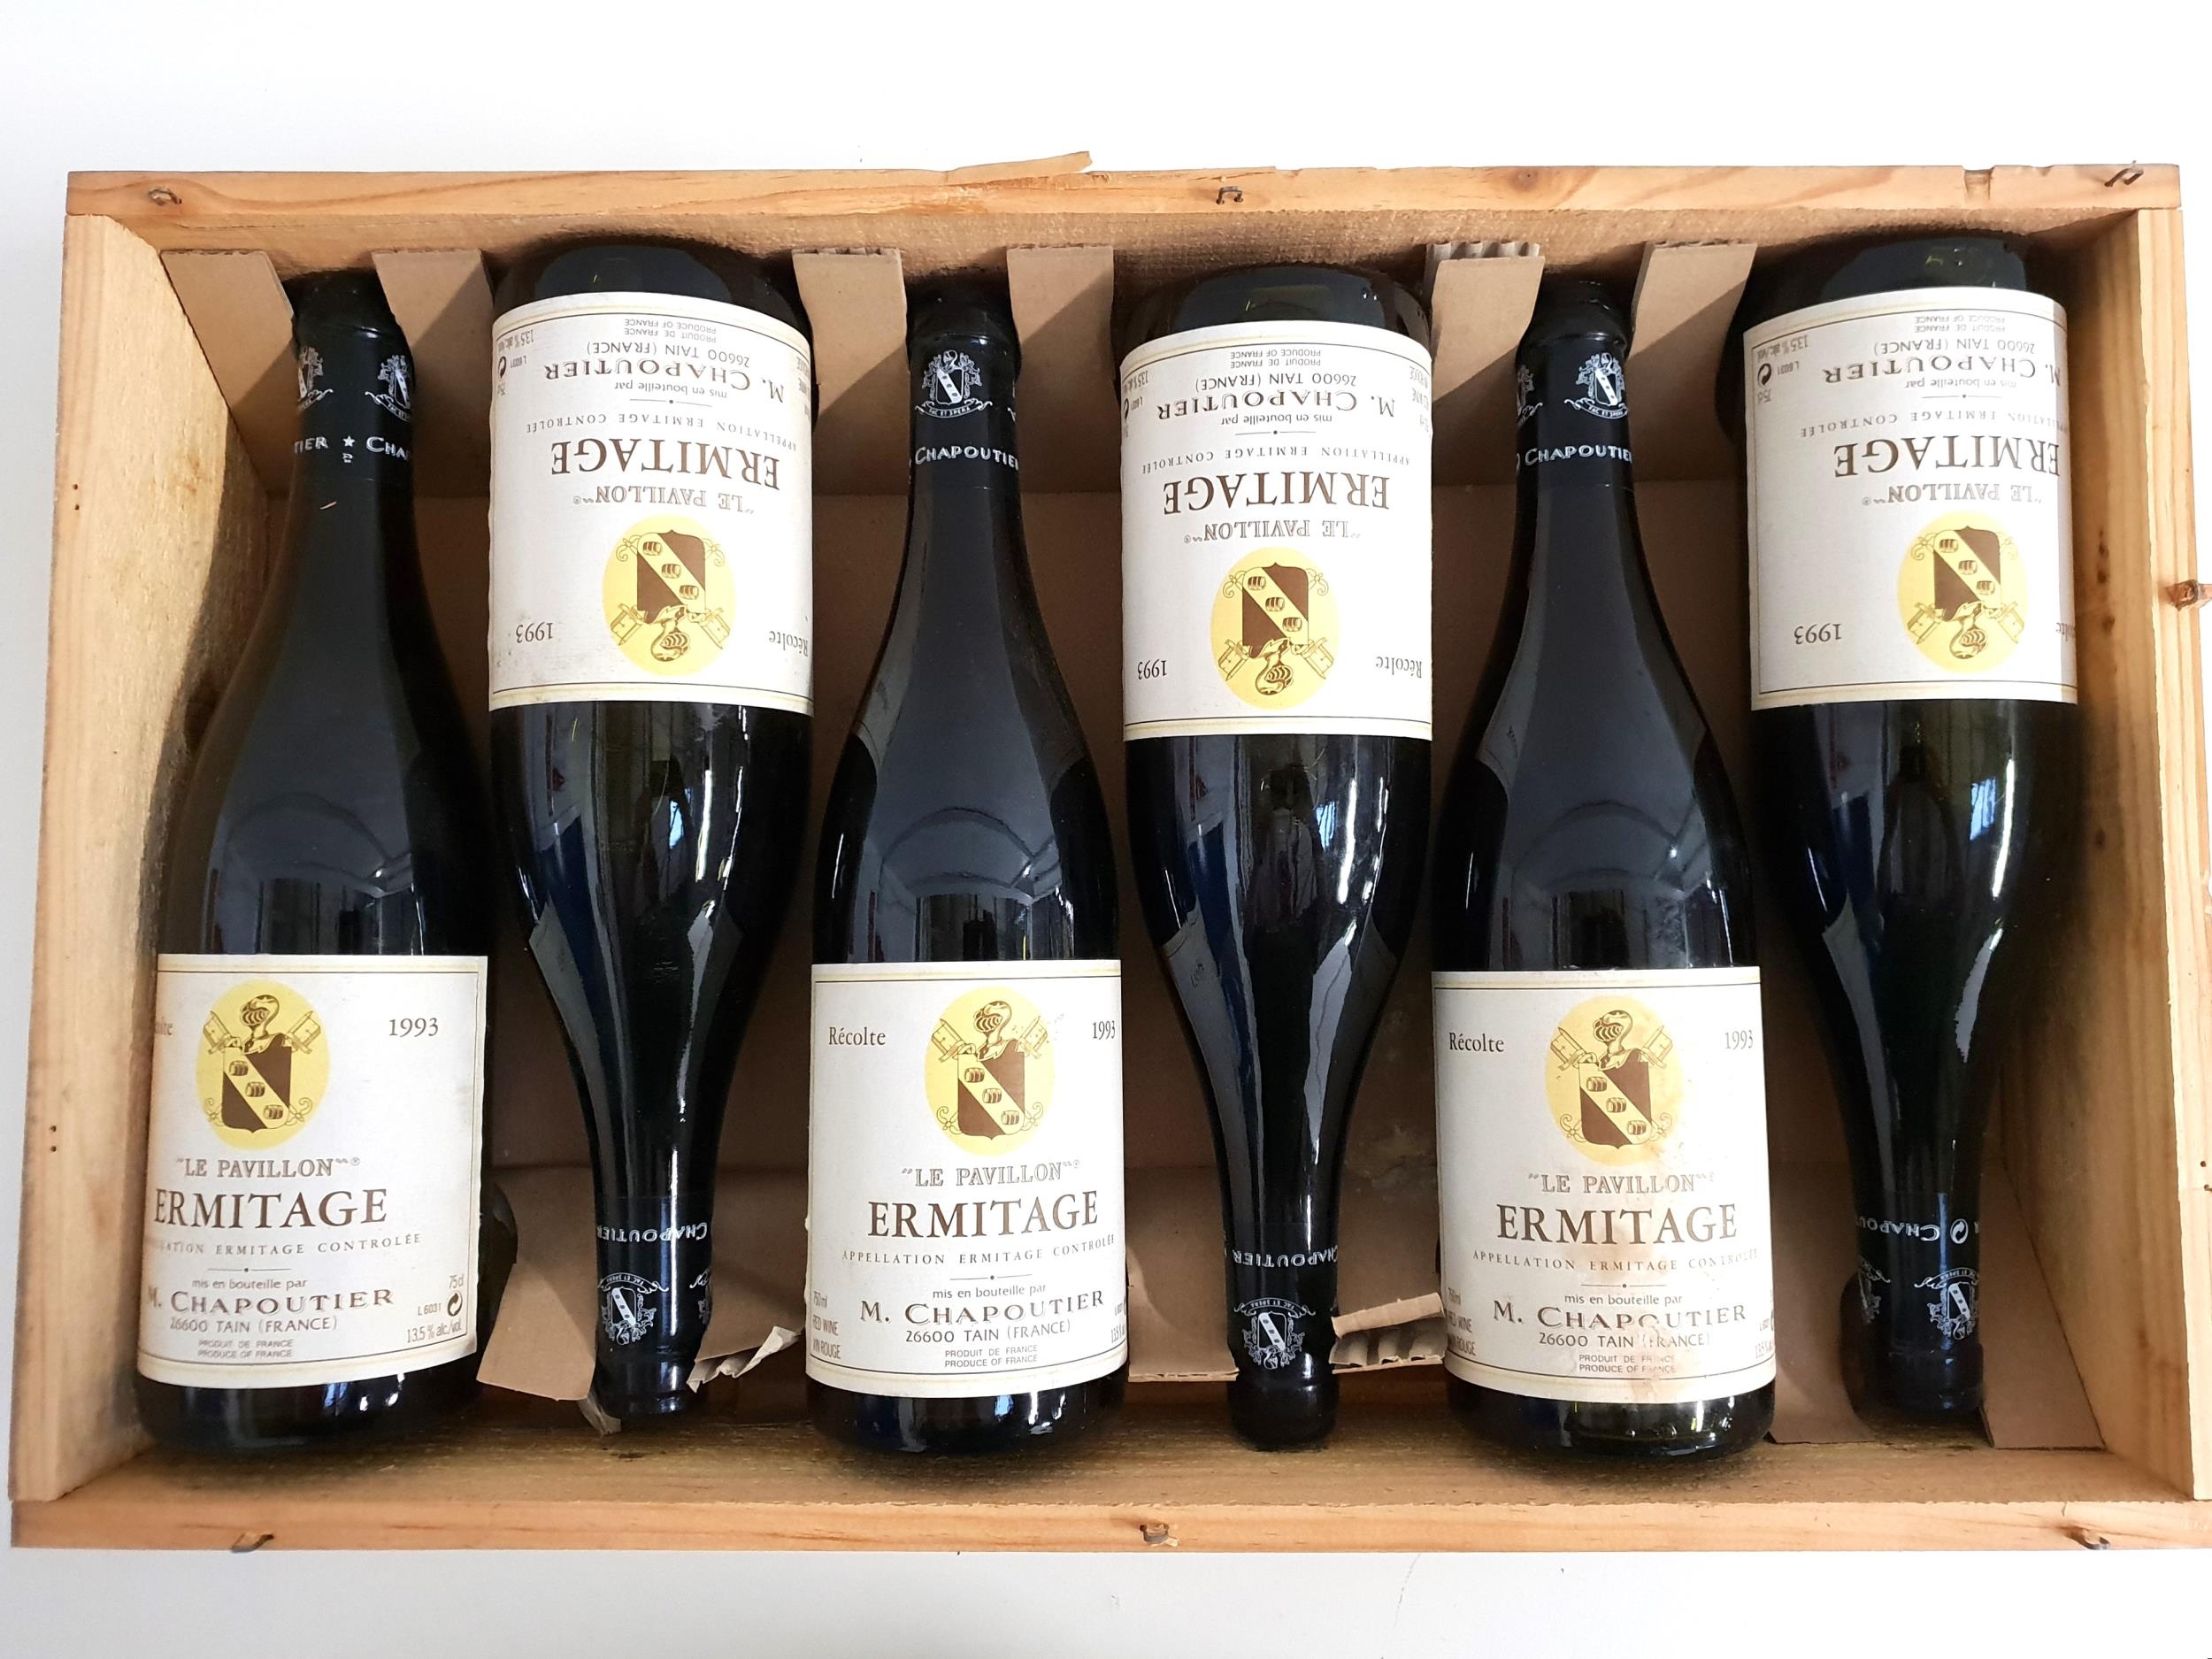 M. CHAPOUTIER LE PAVILLON ERMITAGE 1993 6 bottles, in original wooden case, 75cl and 13.5% - Image 3 of 3